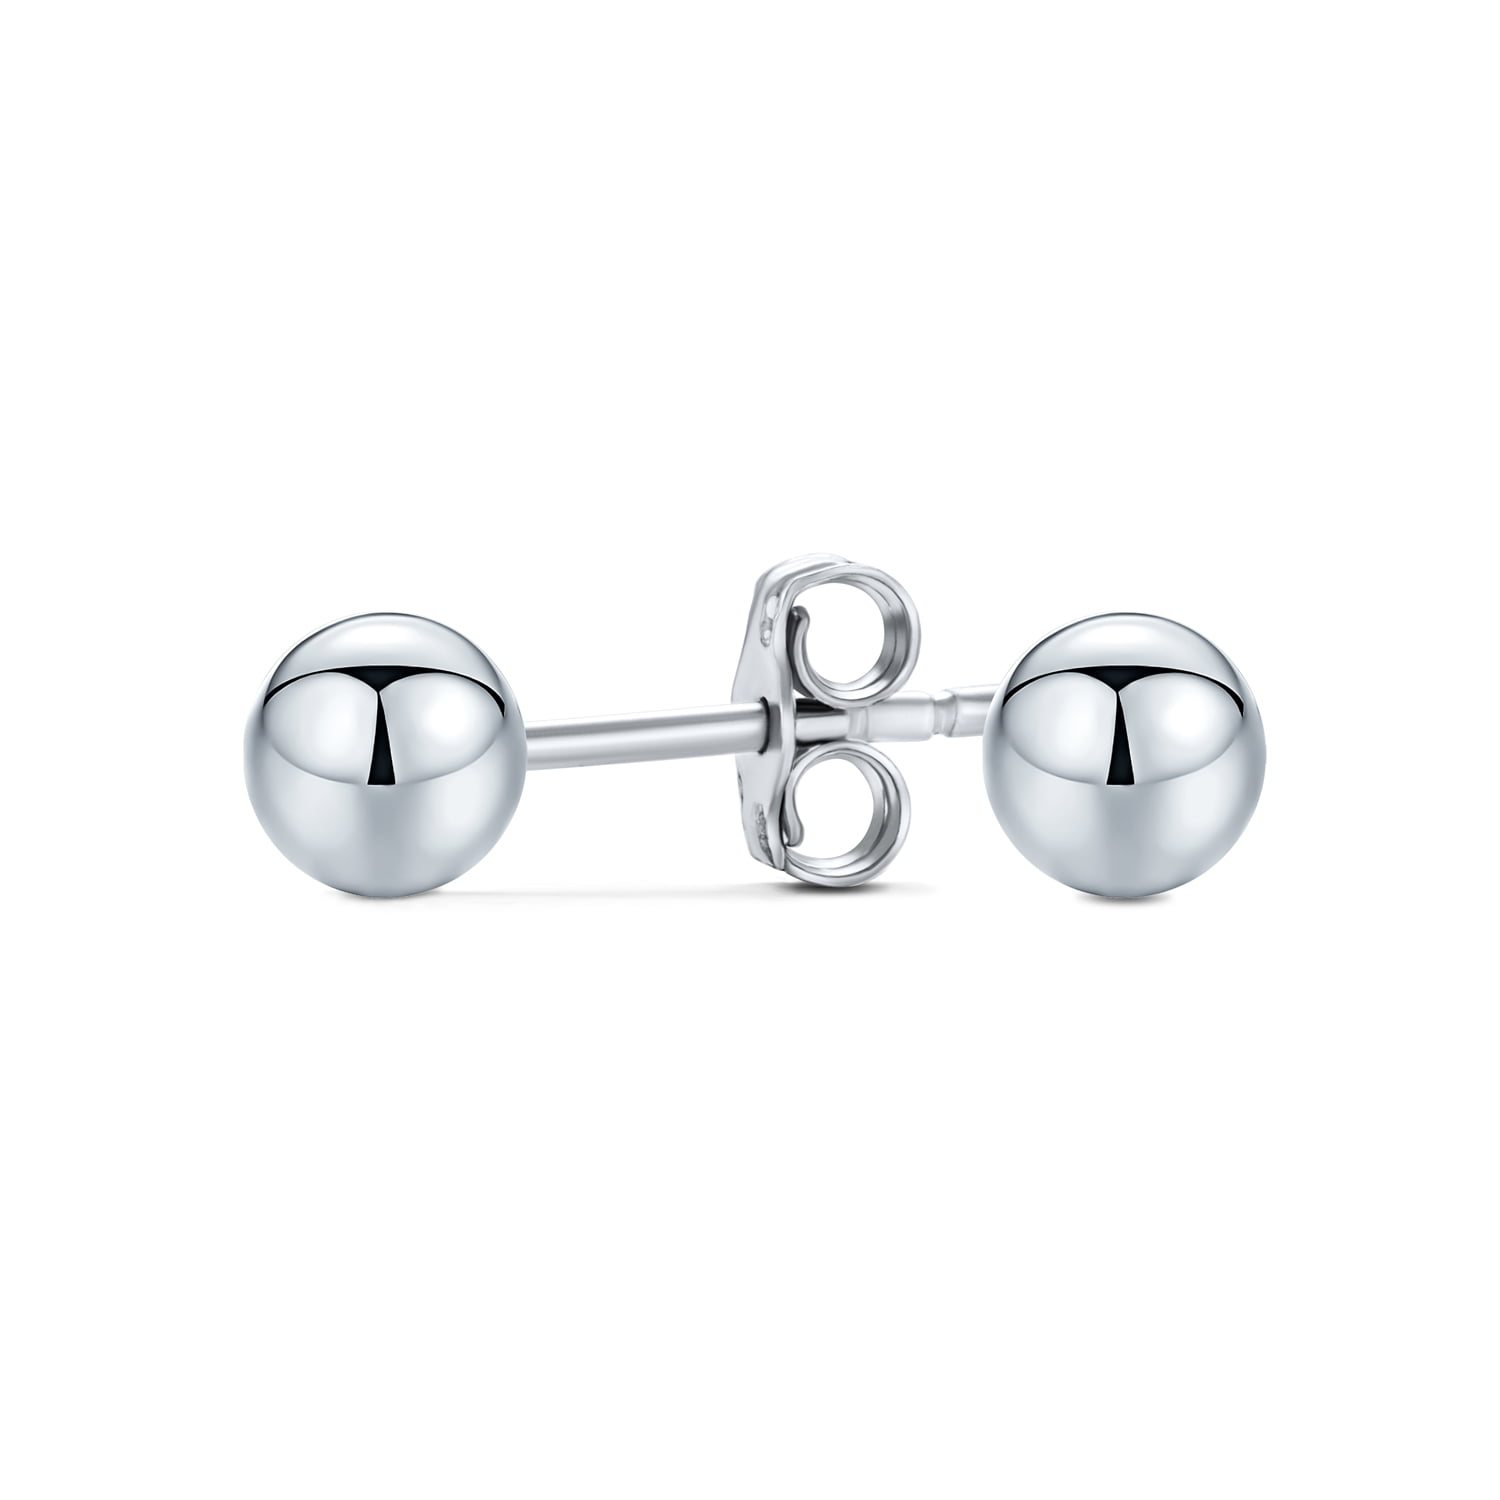 SMALL 925 Sterling Silver 10mm x 7mm Infinity Symbol Heart Studs Stud Earrings 